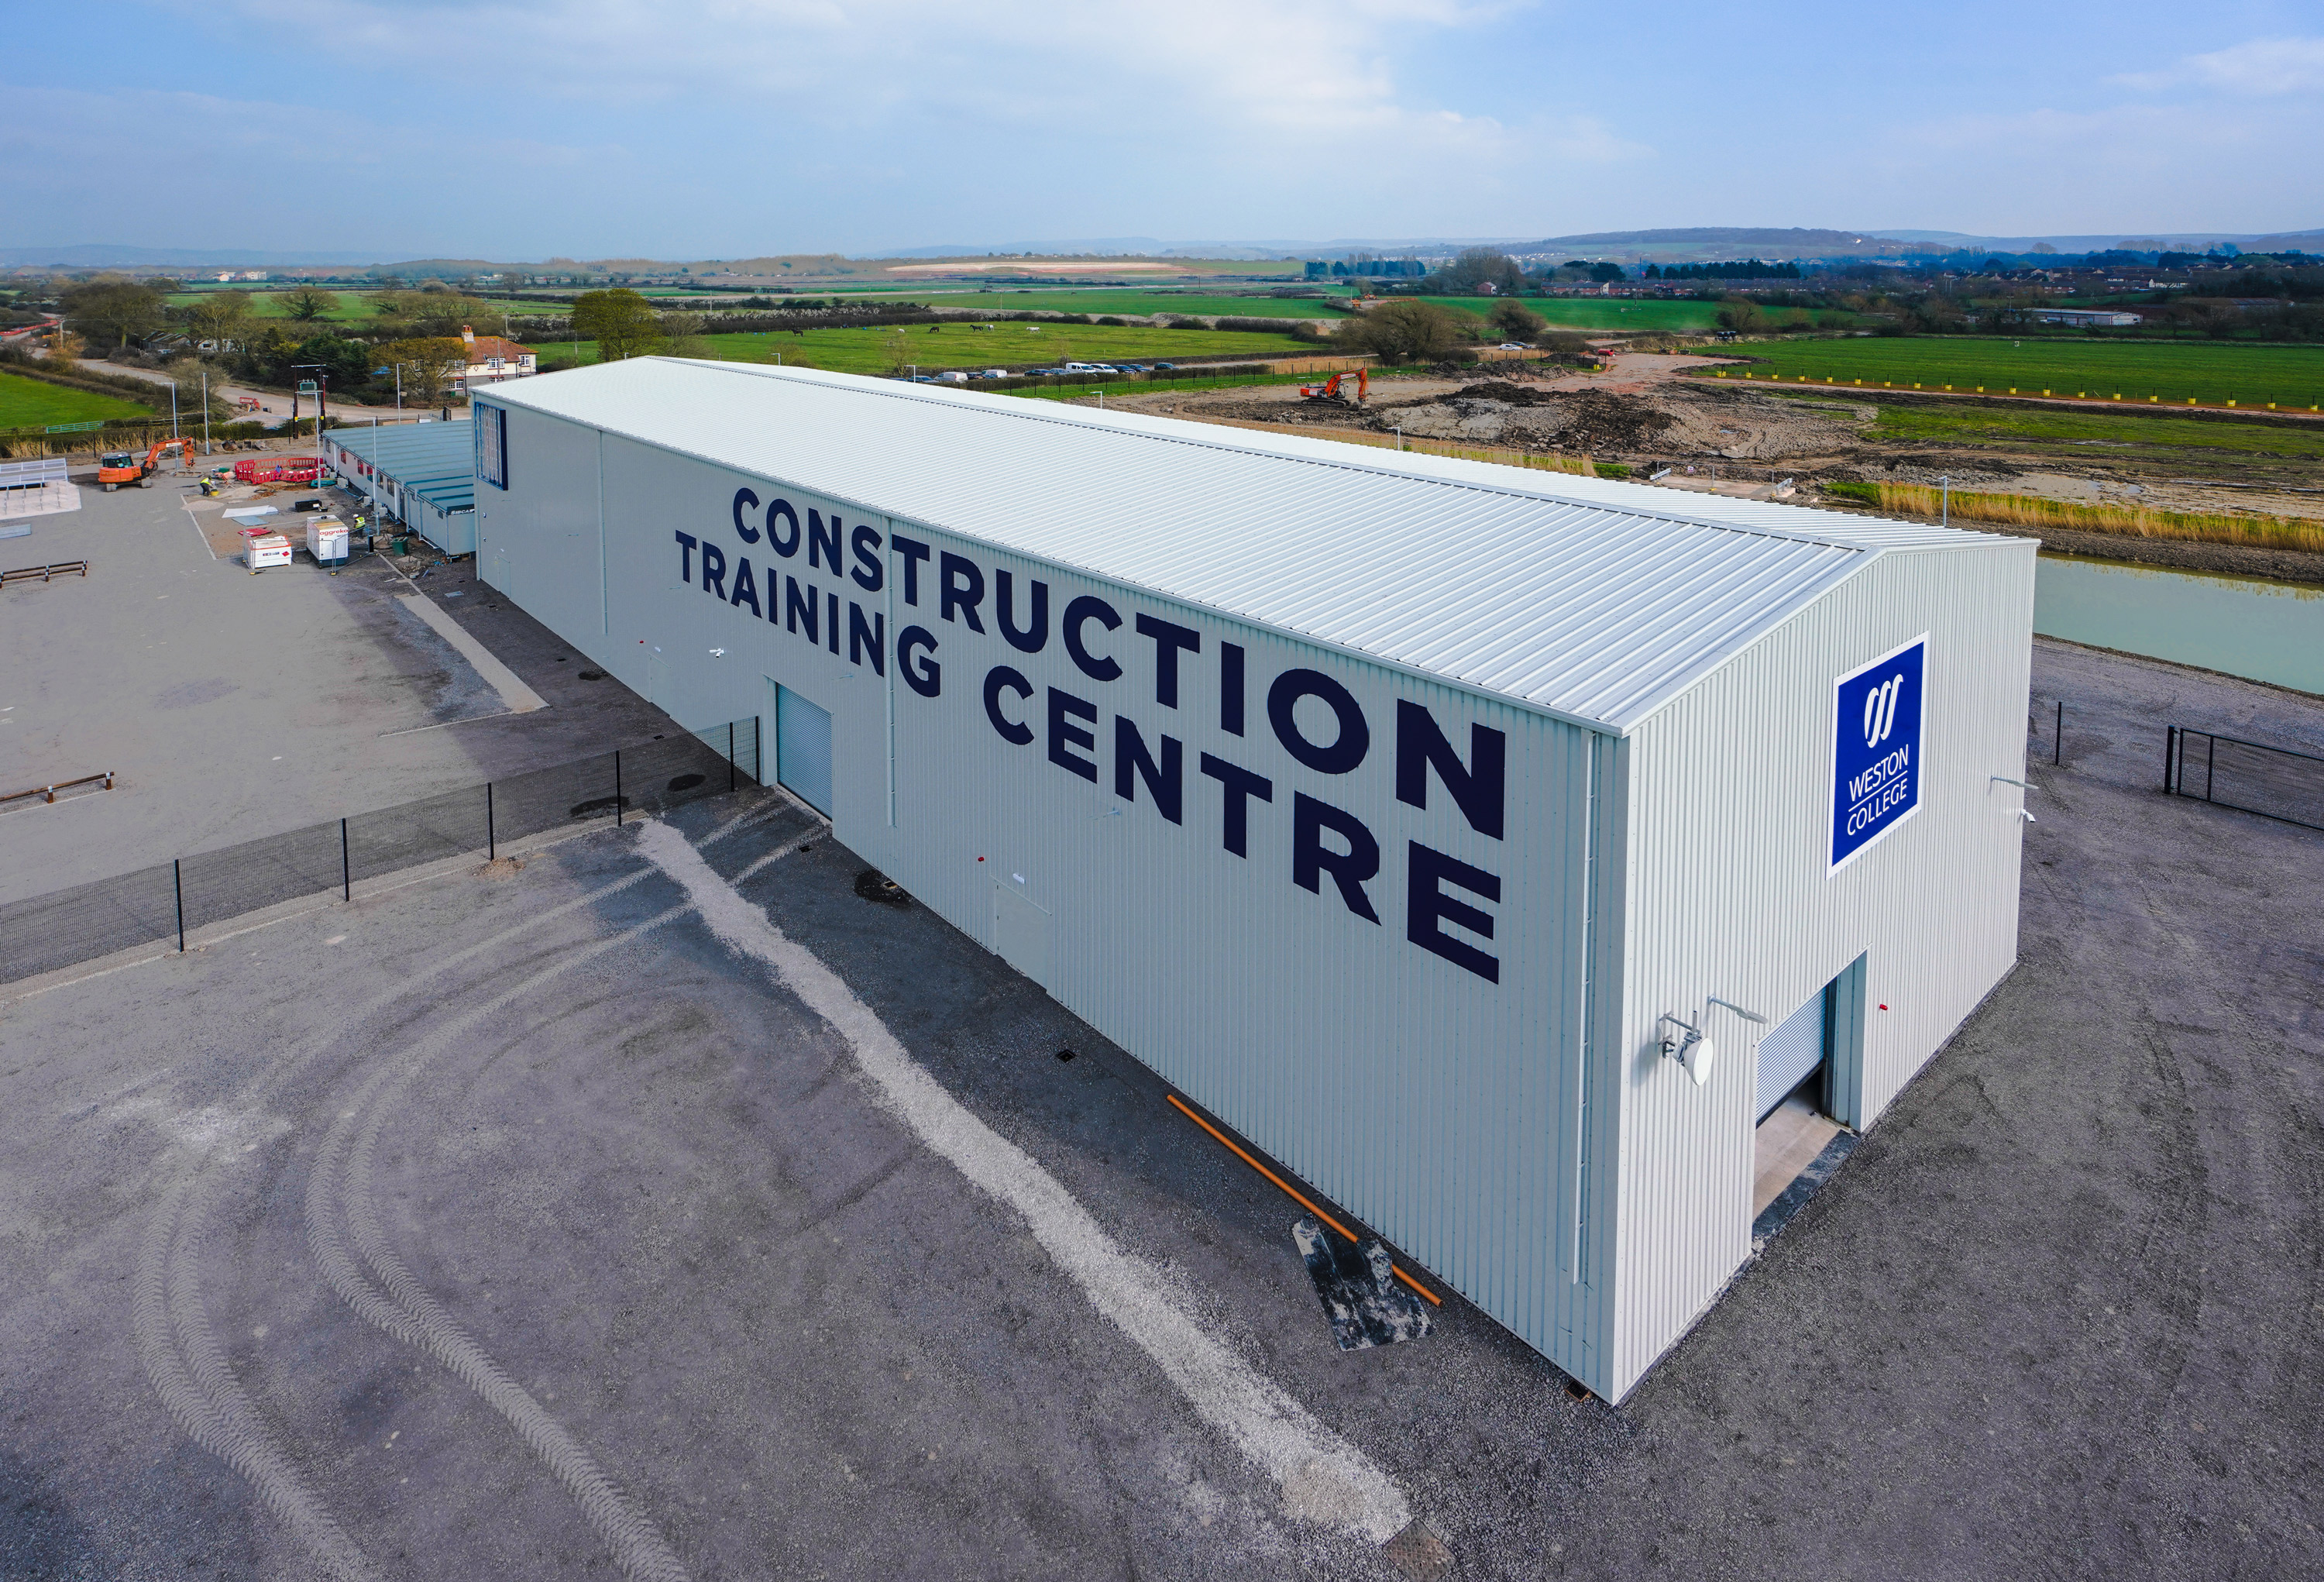 Construction Training Centre